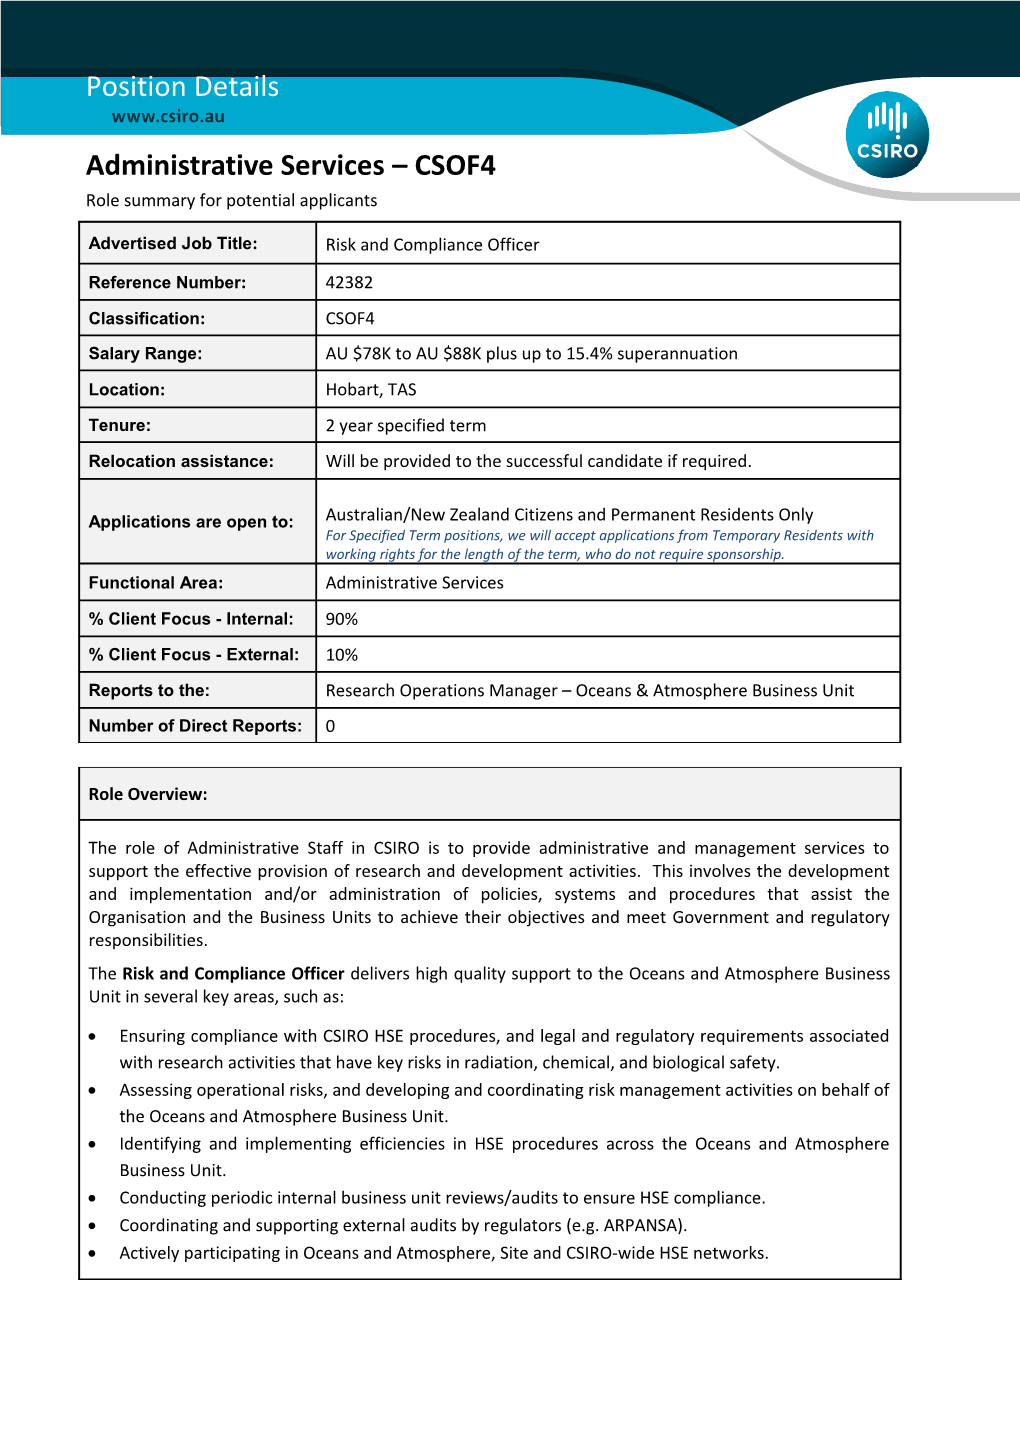 Position Details - Administrative Services - CSOF4